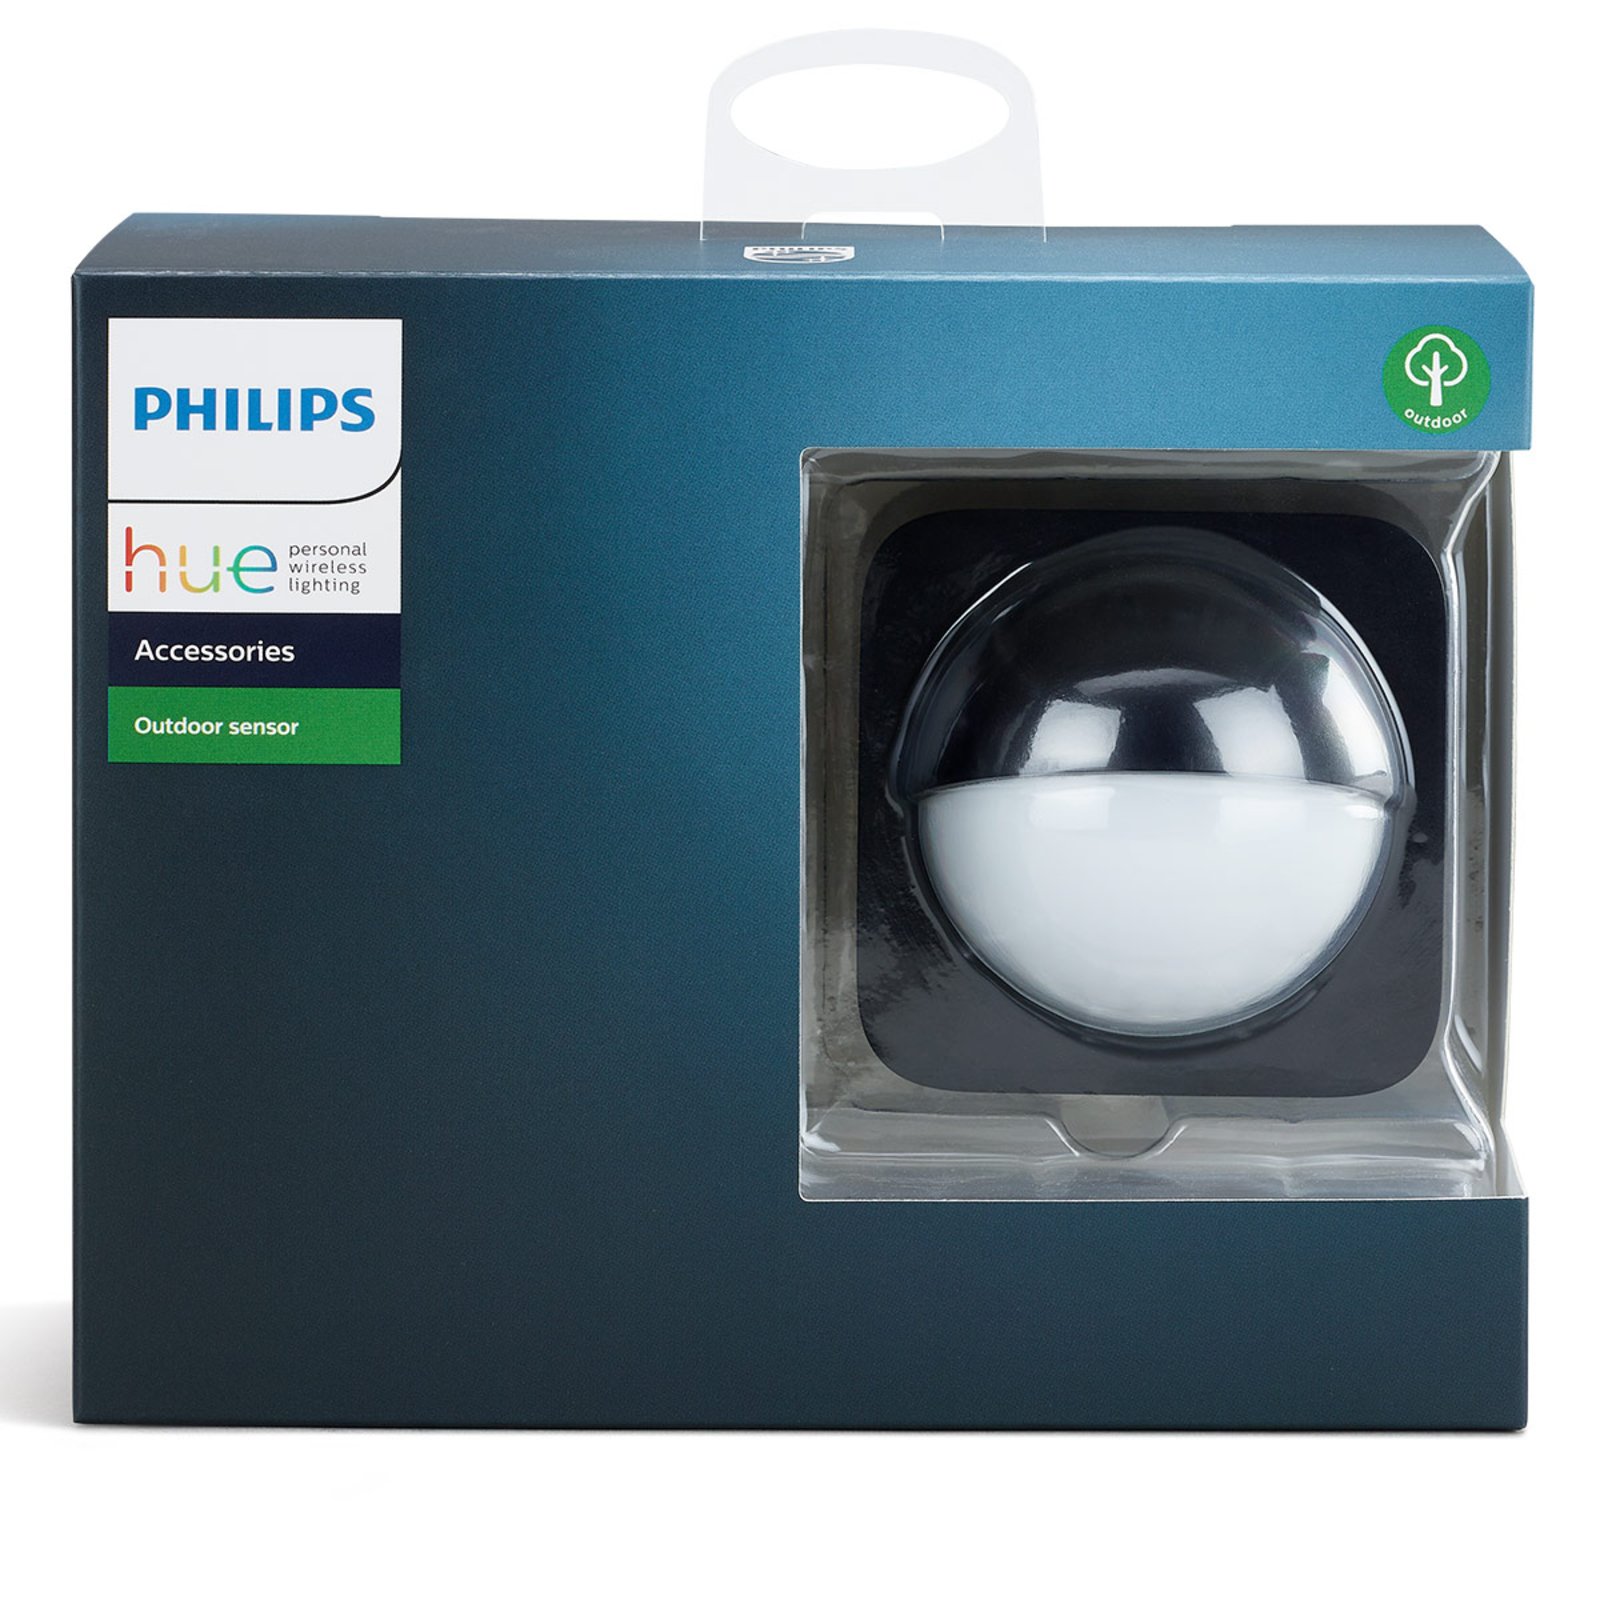 Philips Hue Outdoor senzor detektor pohybu